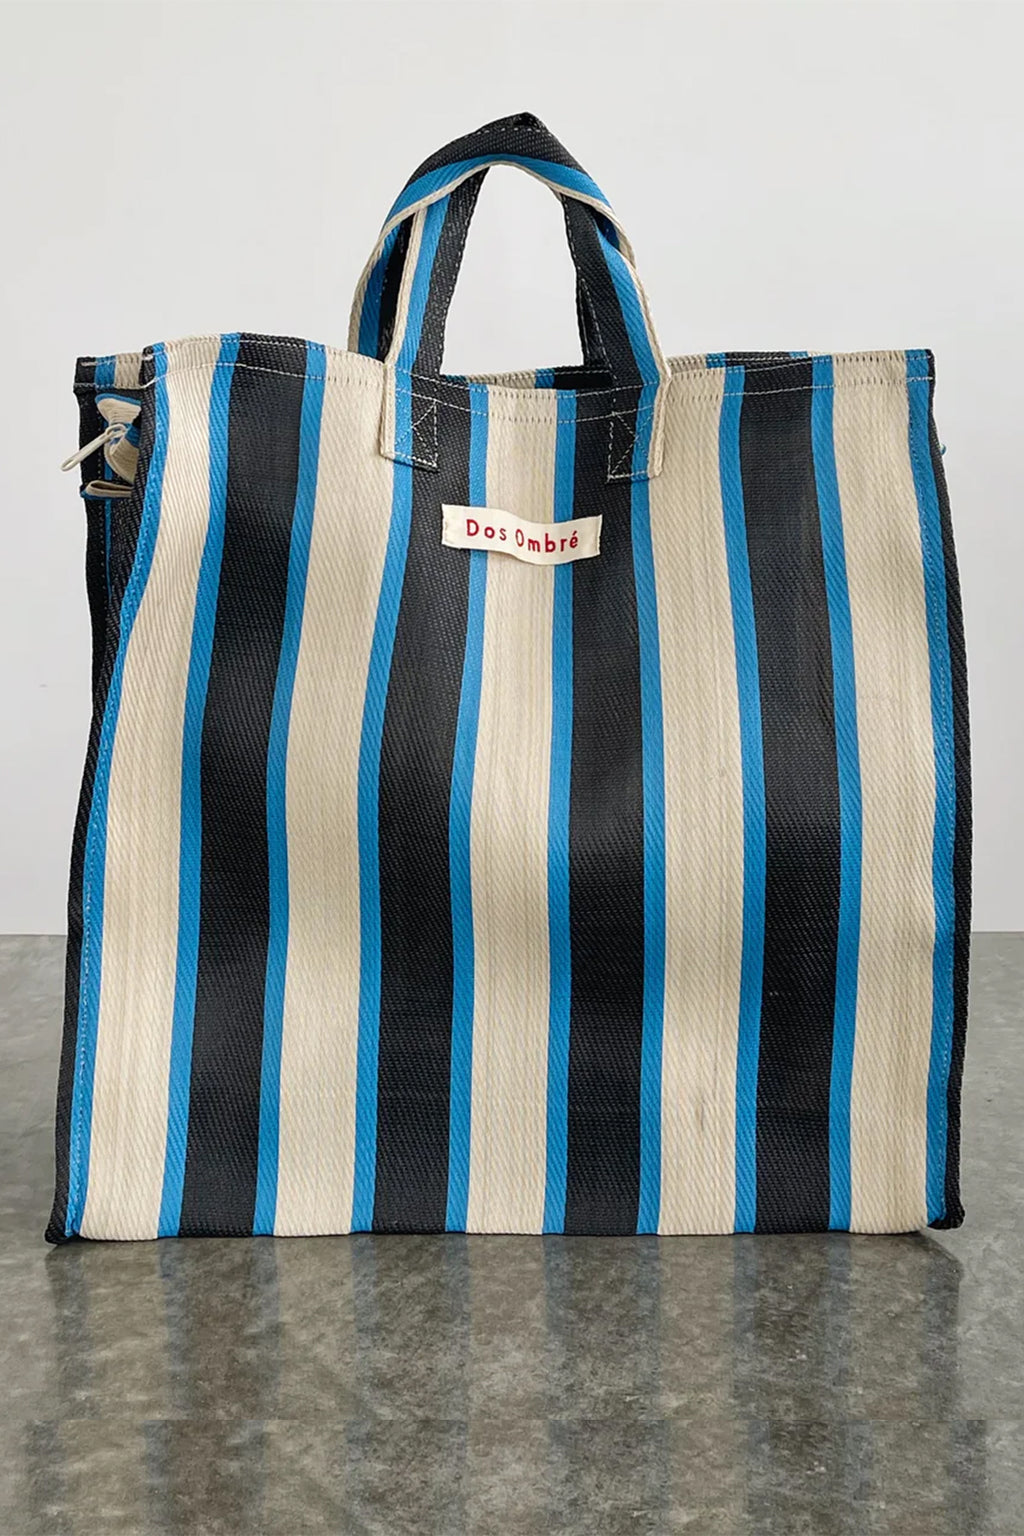 Dos Ombrè - Bengali Bag - Blue Cream Stripe